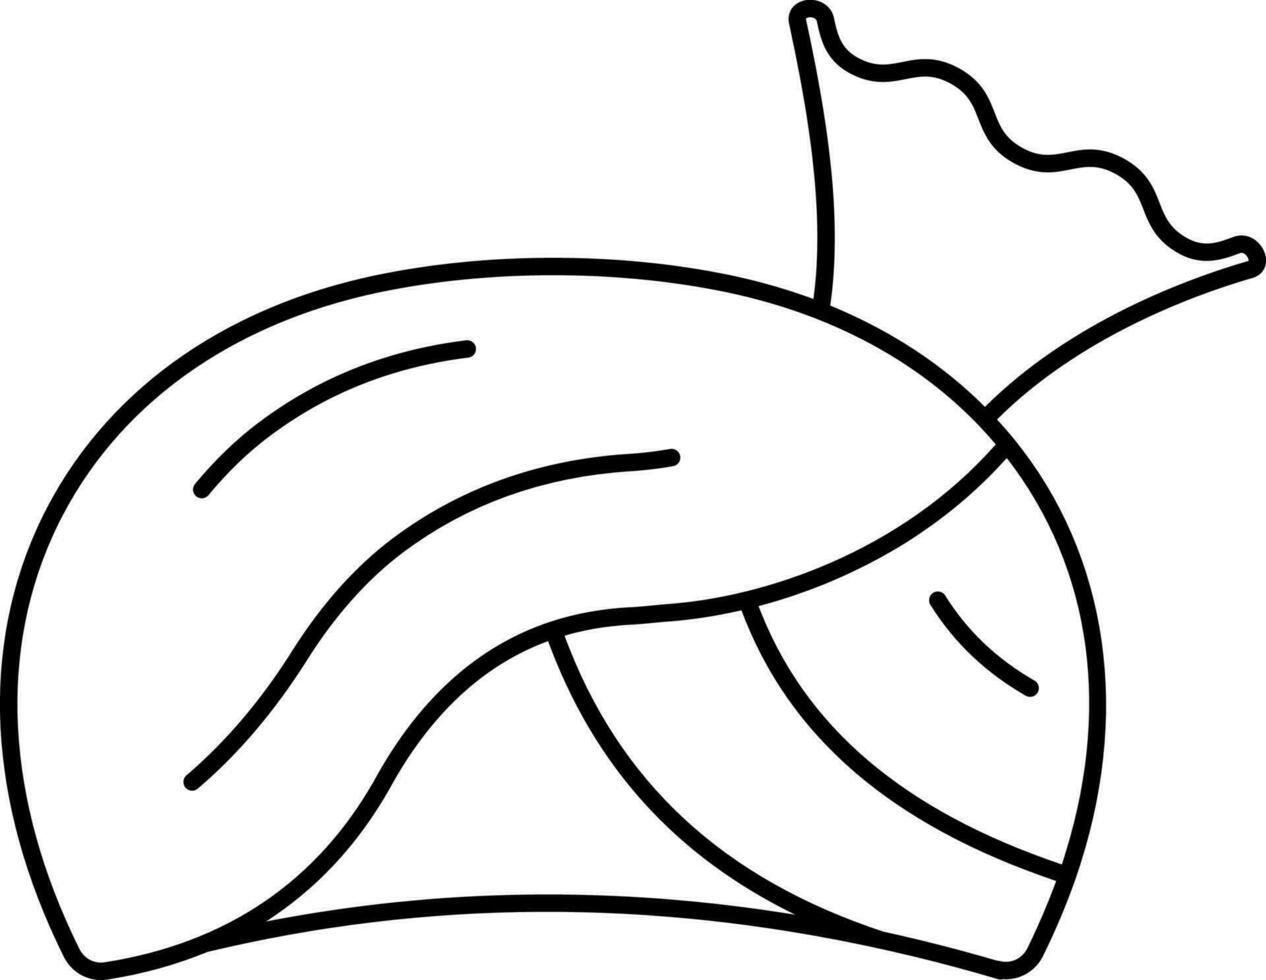 Flat Style Turban Icon In Black Line Art. vector